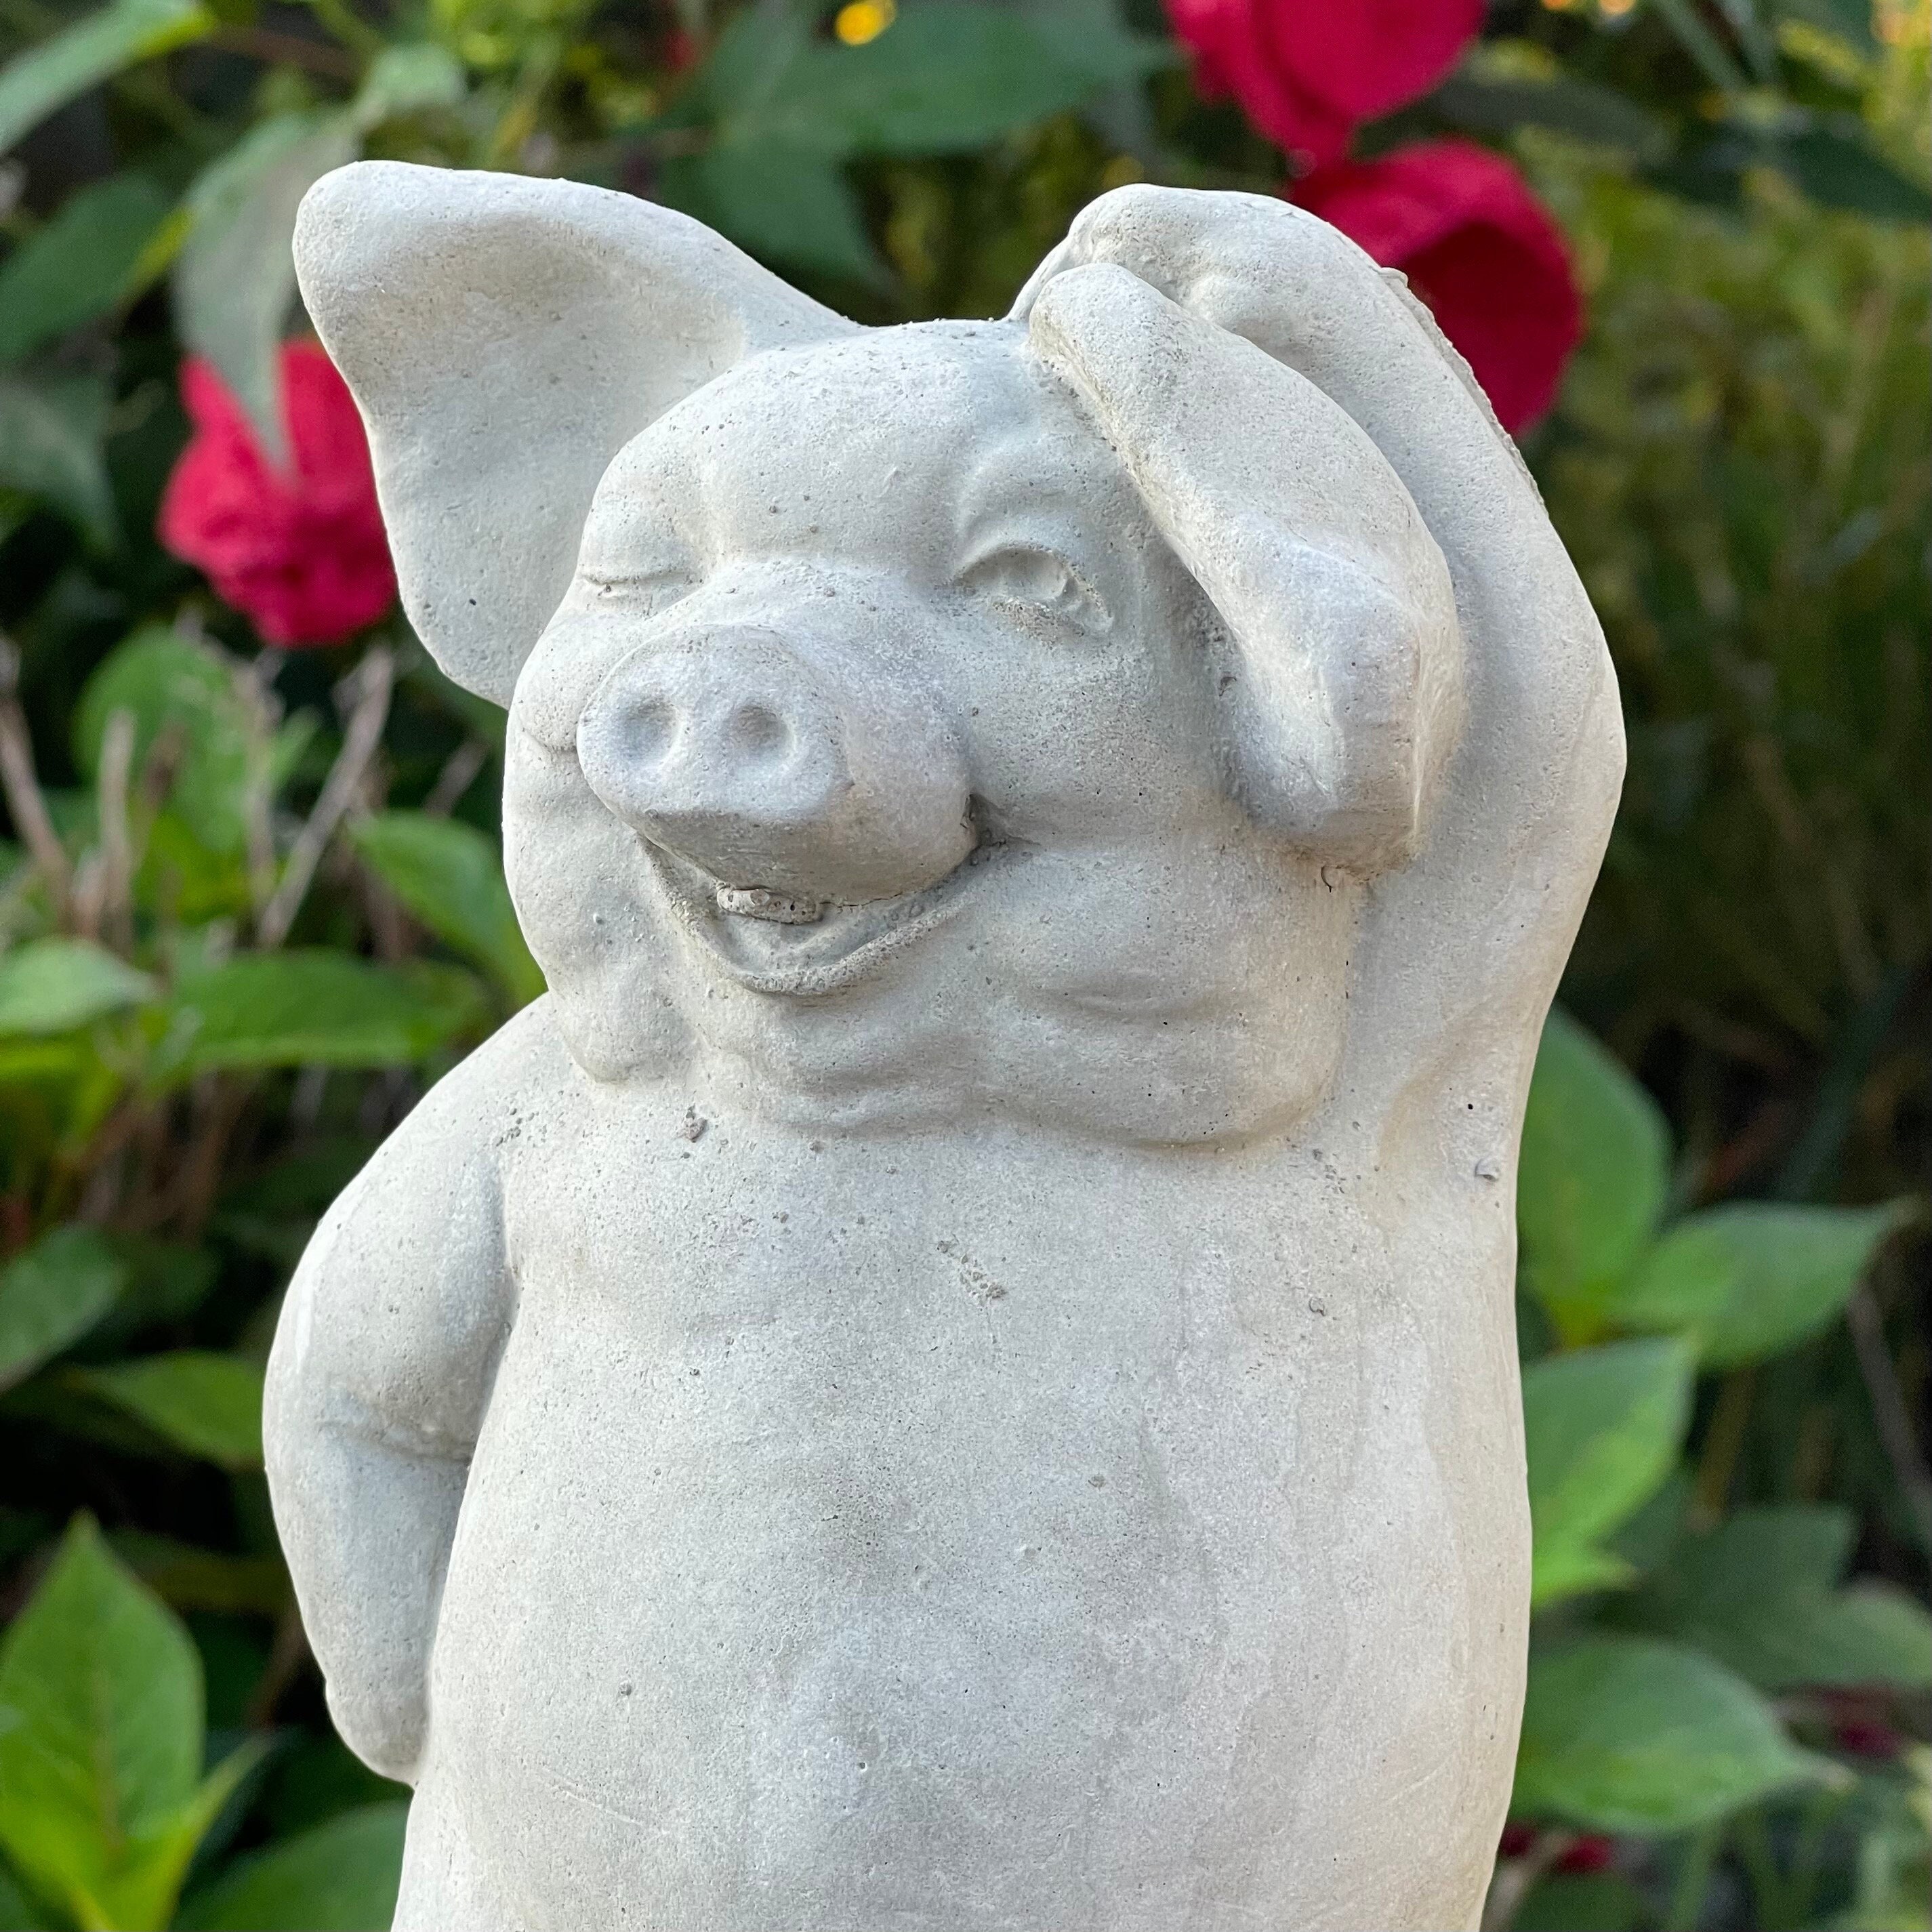 Baby Pig Sitting Piglet Yard Ornament Resin Figurine Statue